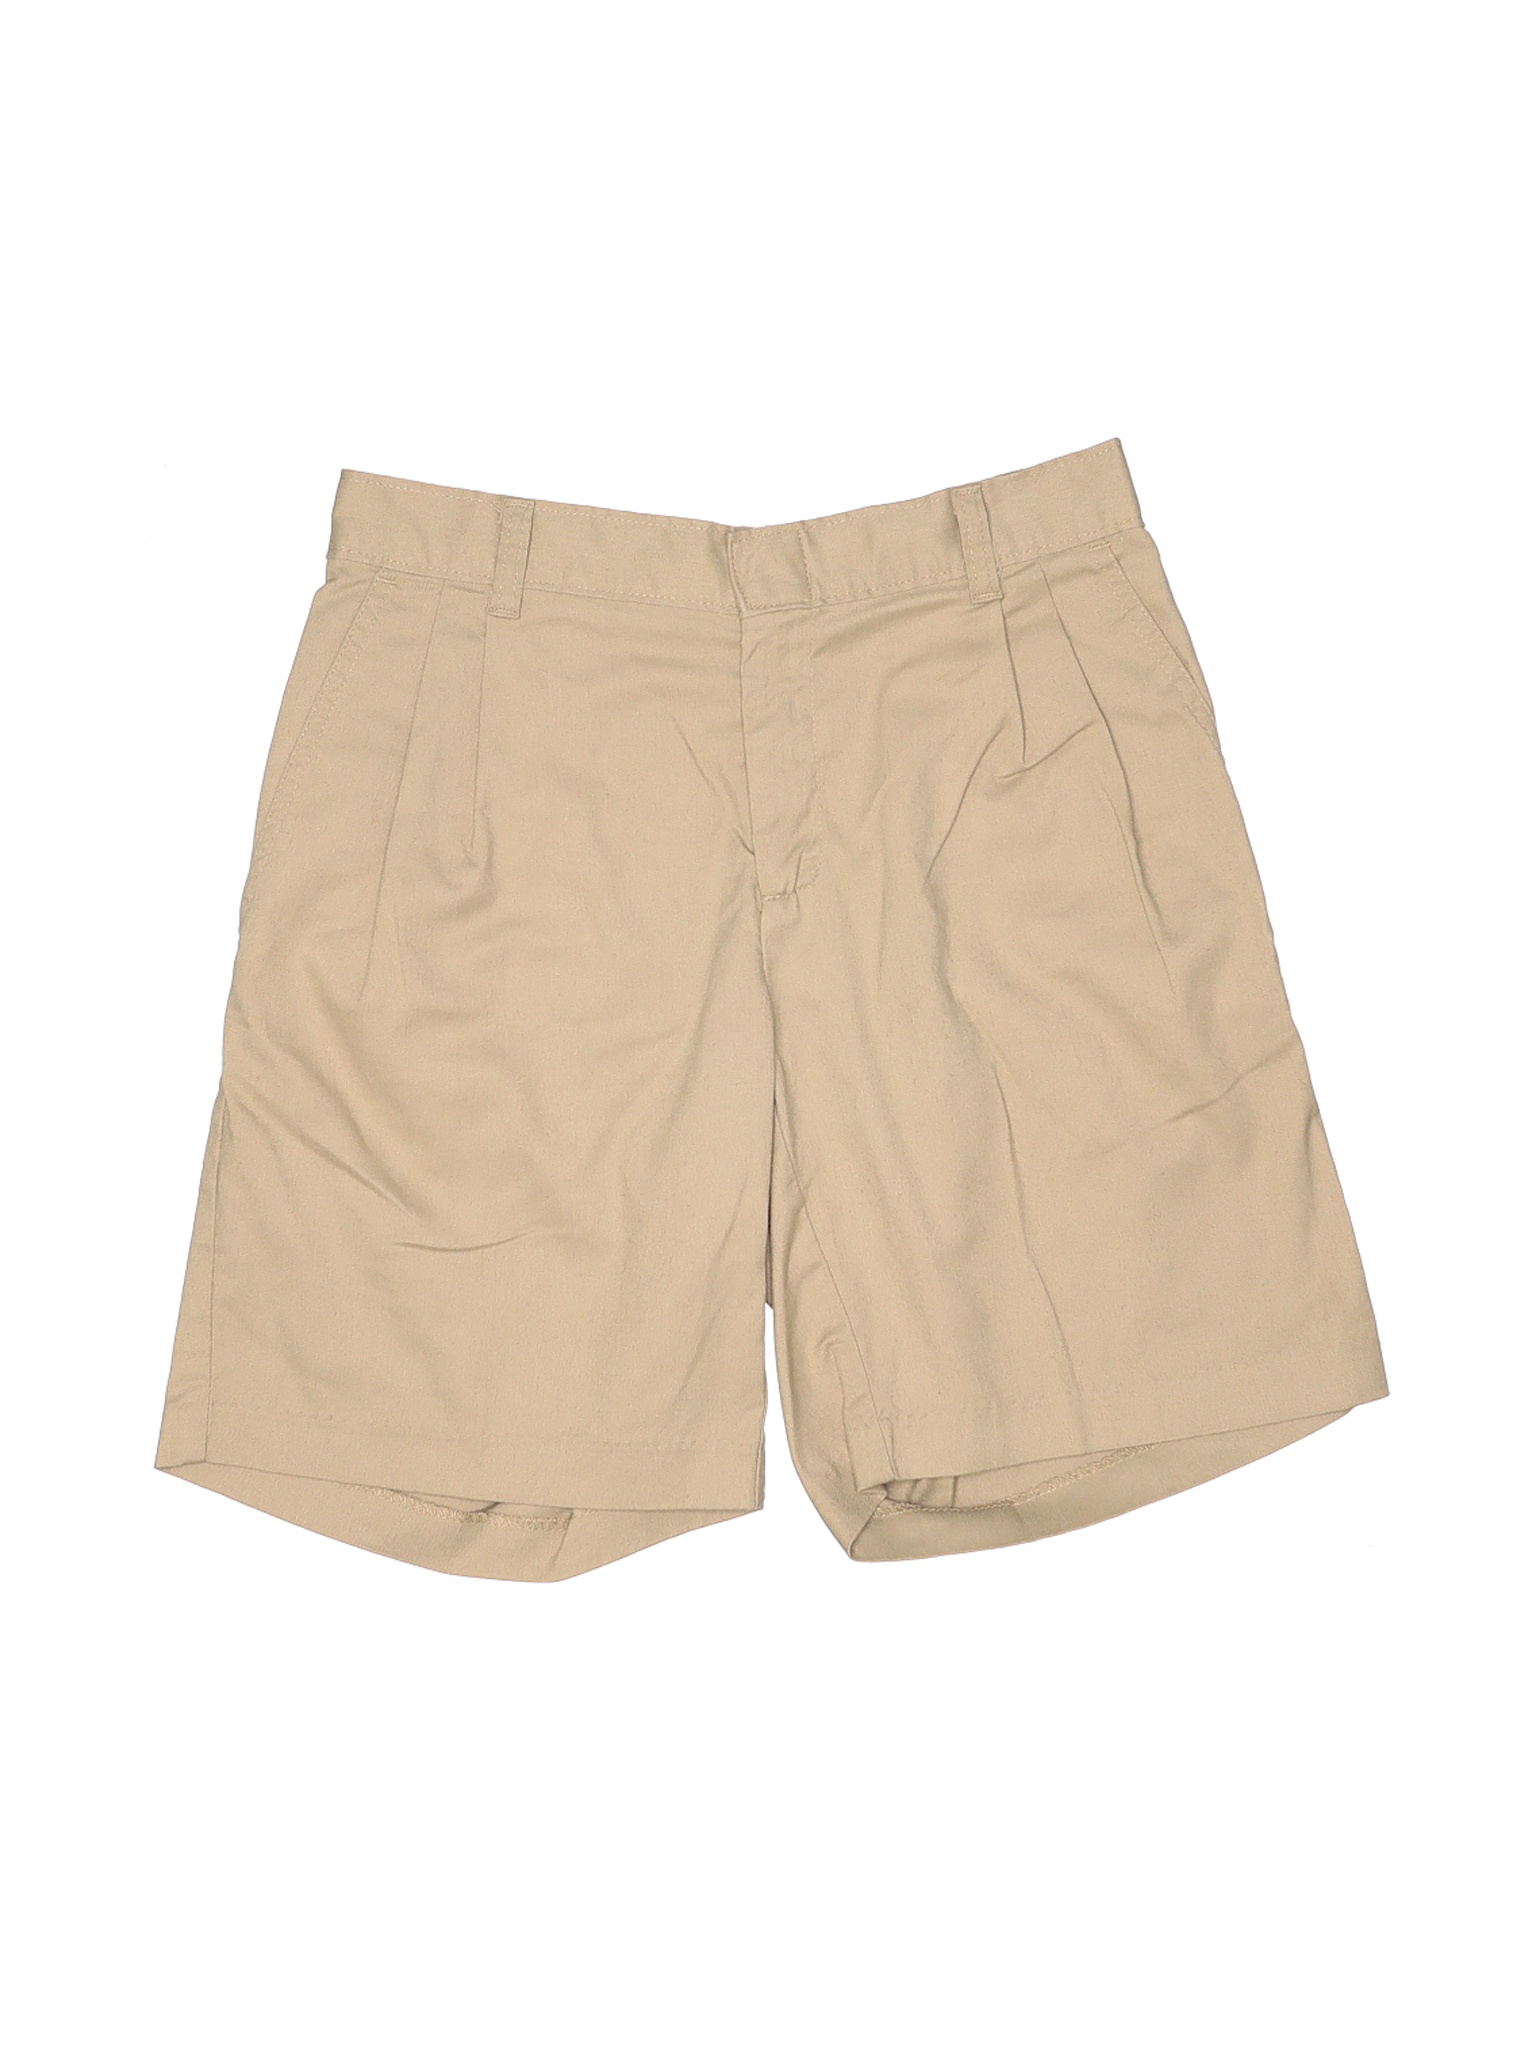 Unbranded Women Brown Khaki Shorts 6 | eBay